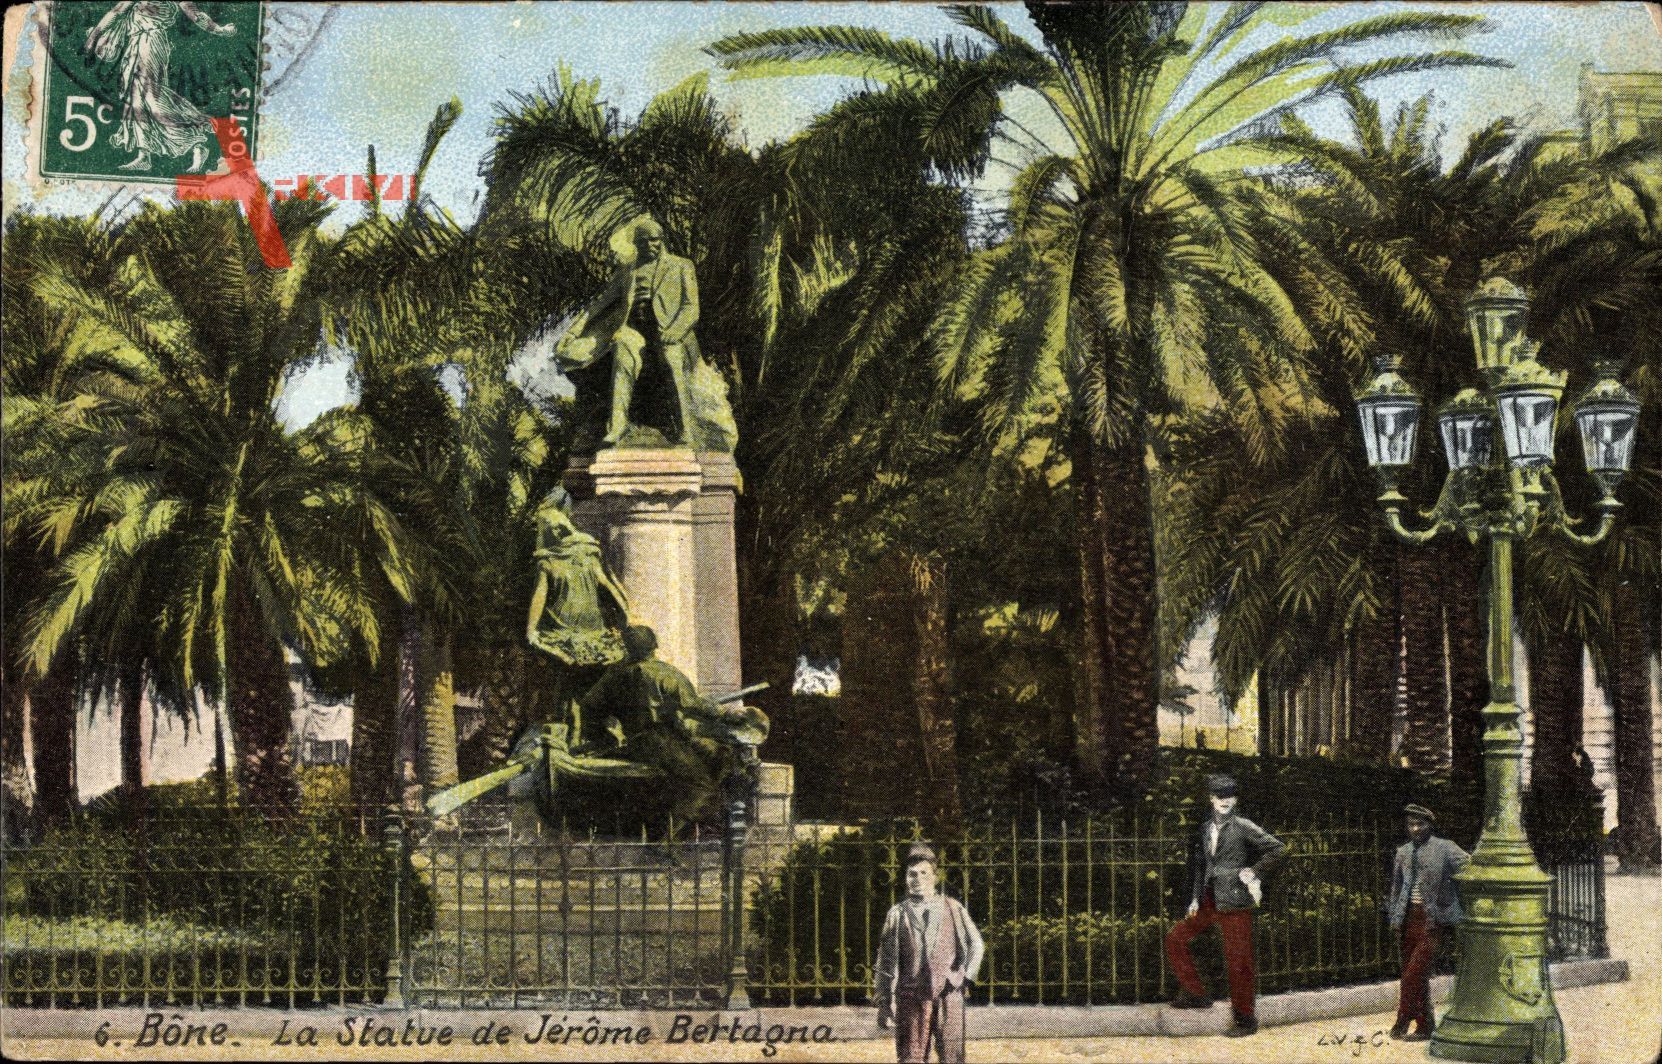 Bone Algerien, La Statue de Jerome Bertagna, Denkmal, Passanten, Laterne